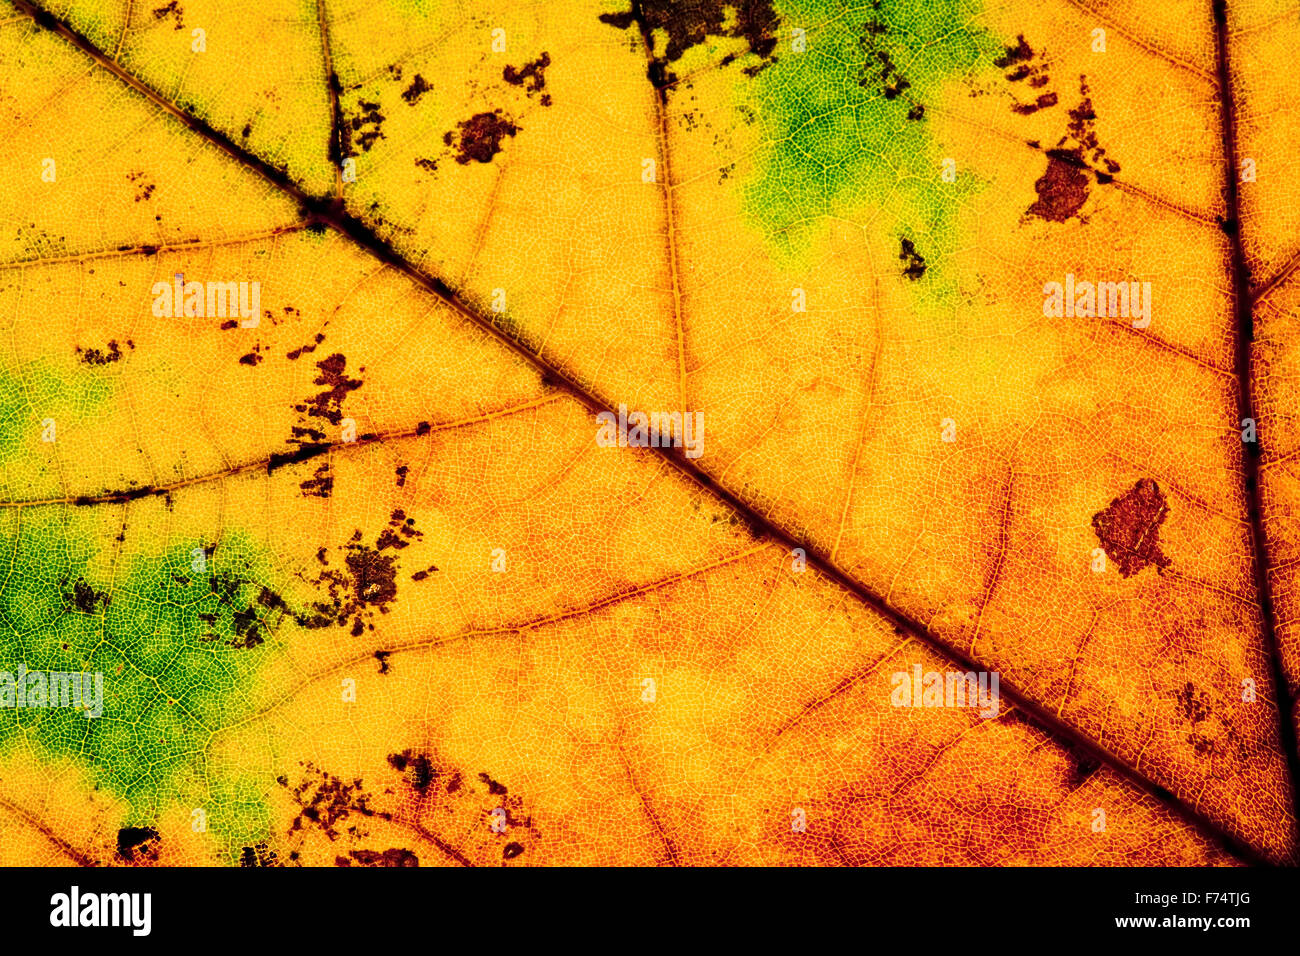 Extreme Closeup of an Autumn Leaf Stock Photo